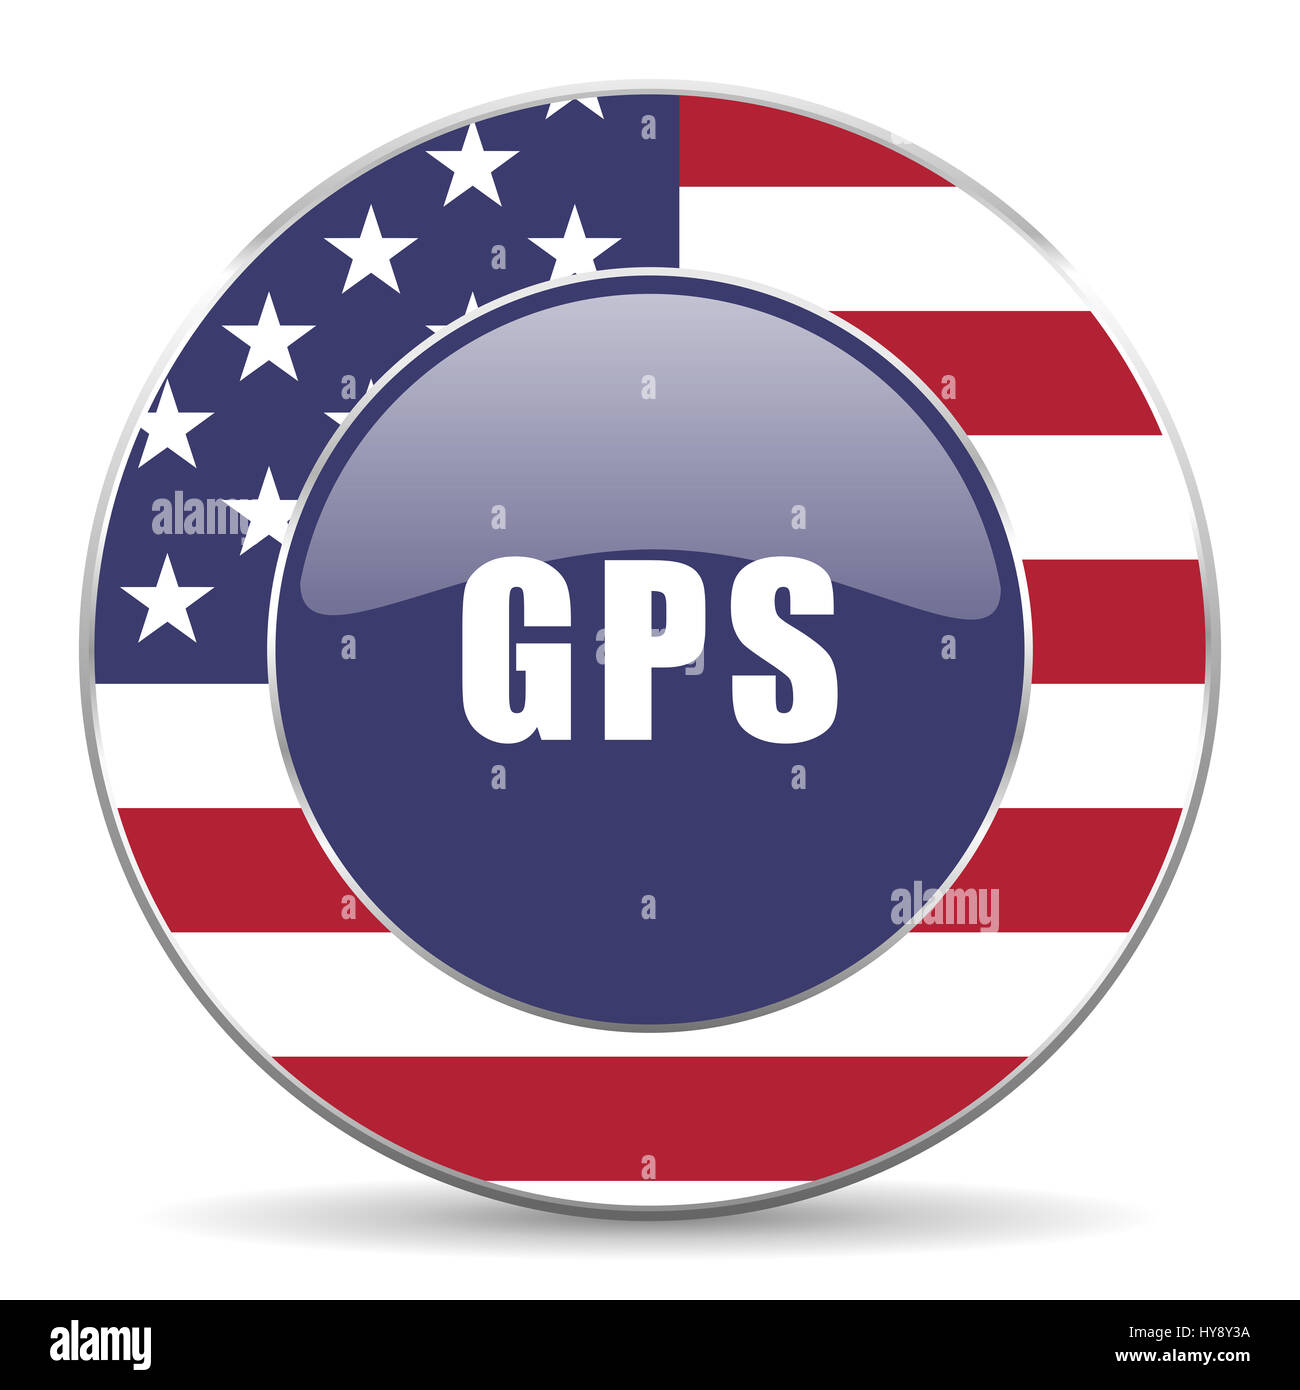 Gps usa design american round internet icon with shadow on white Stock Photo - Alamy